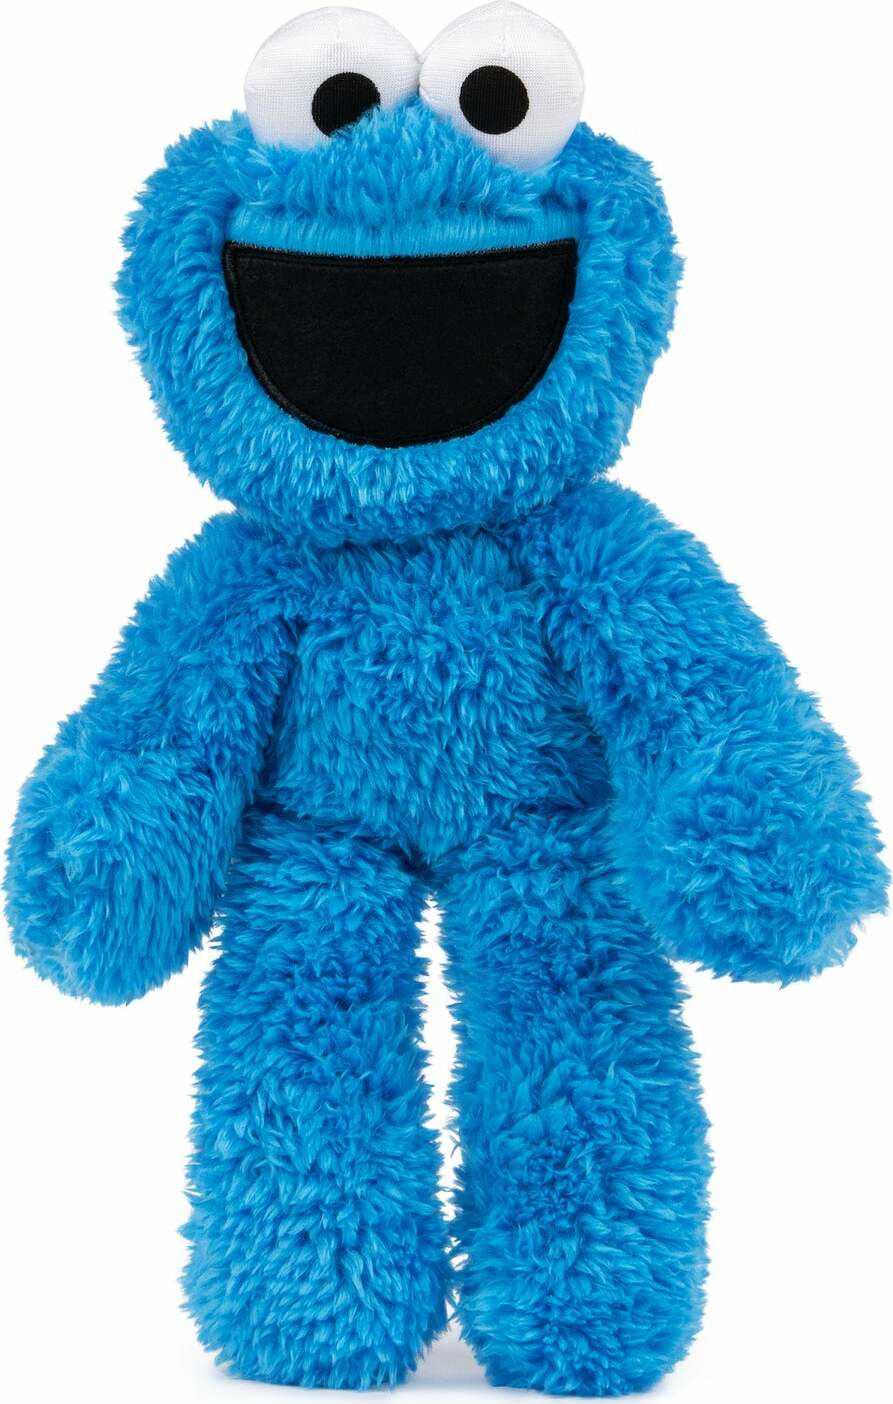 Sesame Street Cookie Monster Take Along Buddy, 13 In